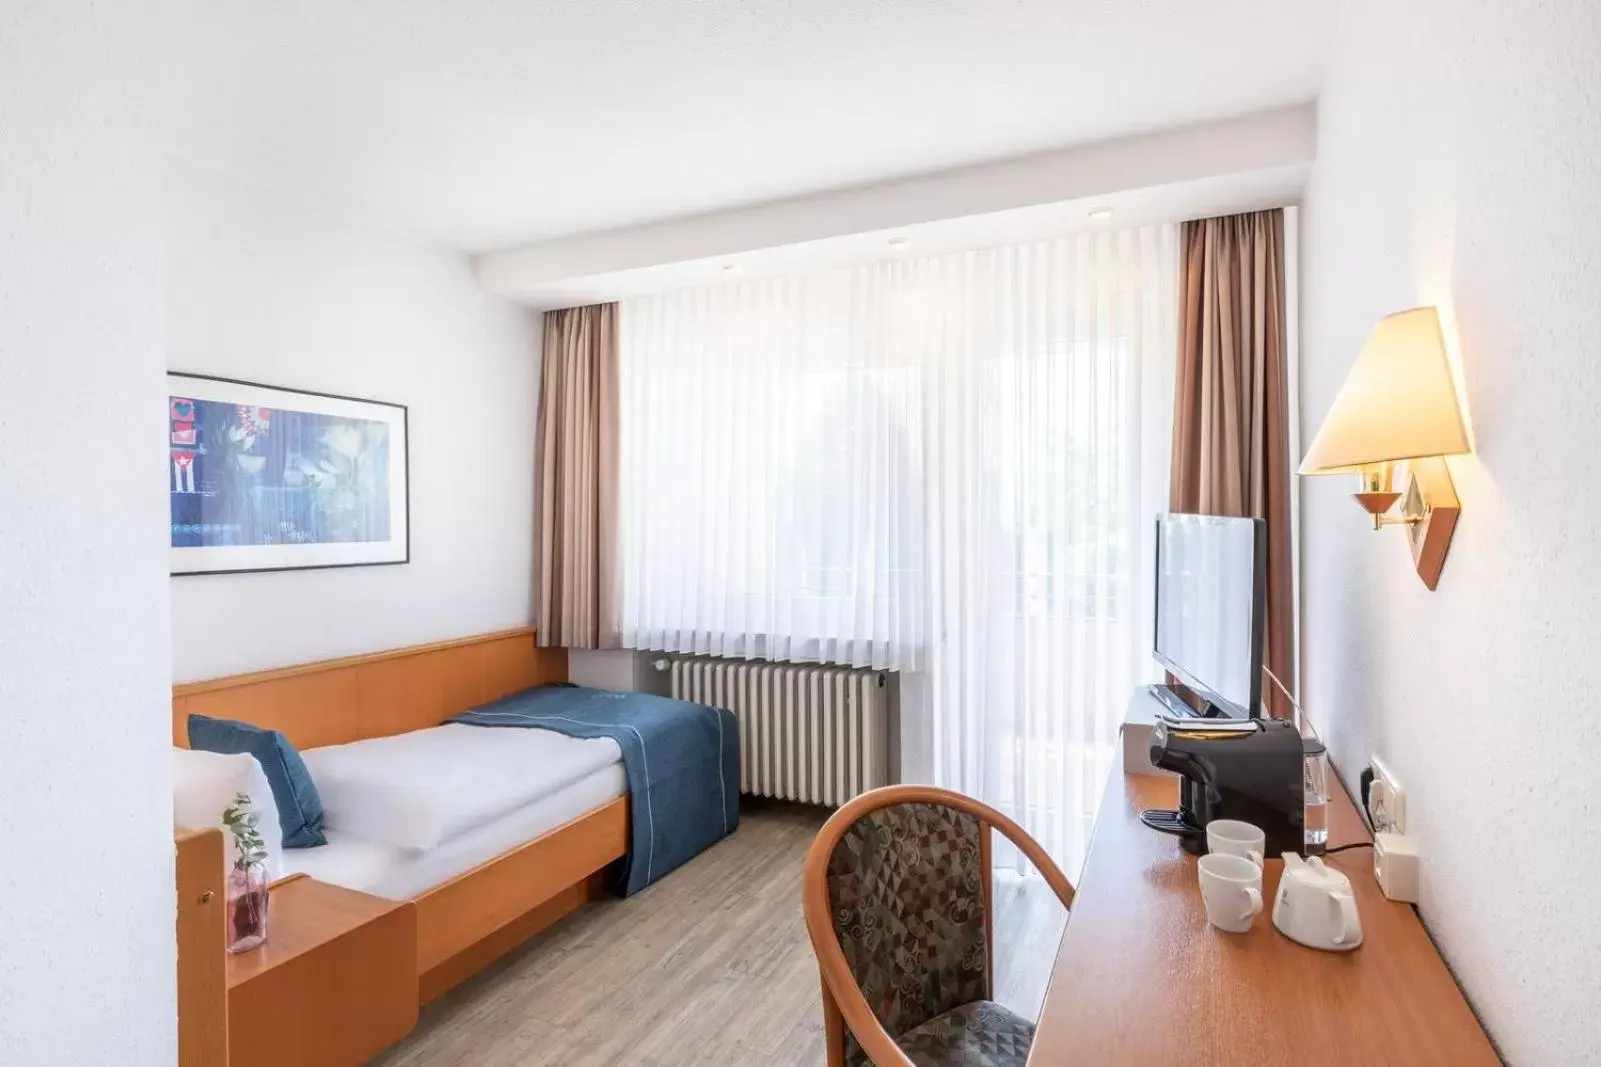 Photo of the whole room, Bed in Select Hotel Elisenhof Mönchengladbach